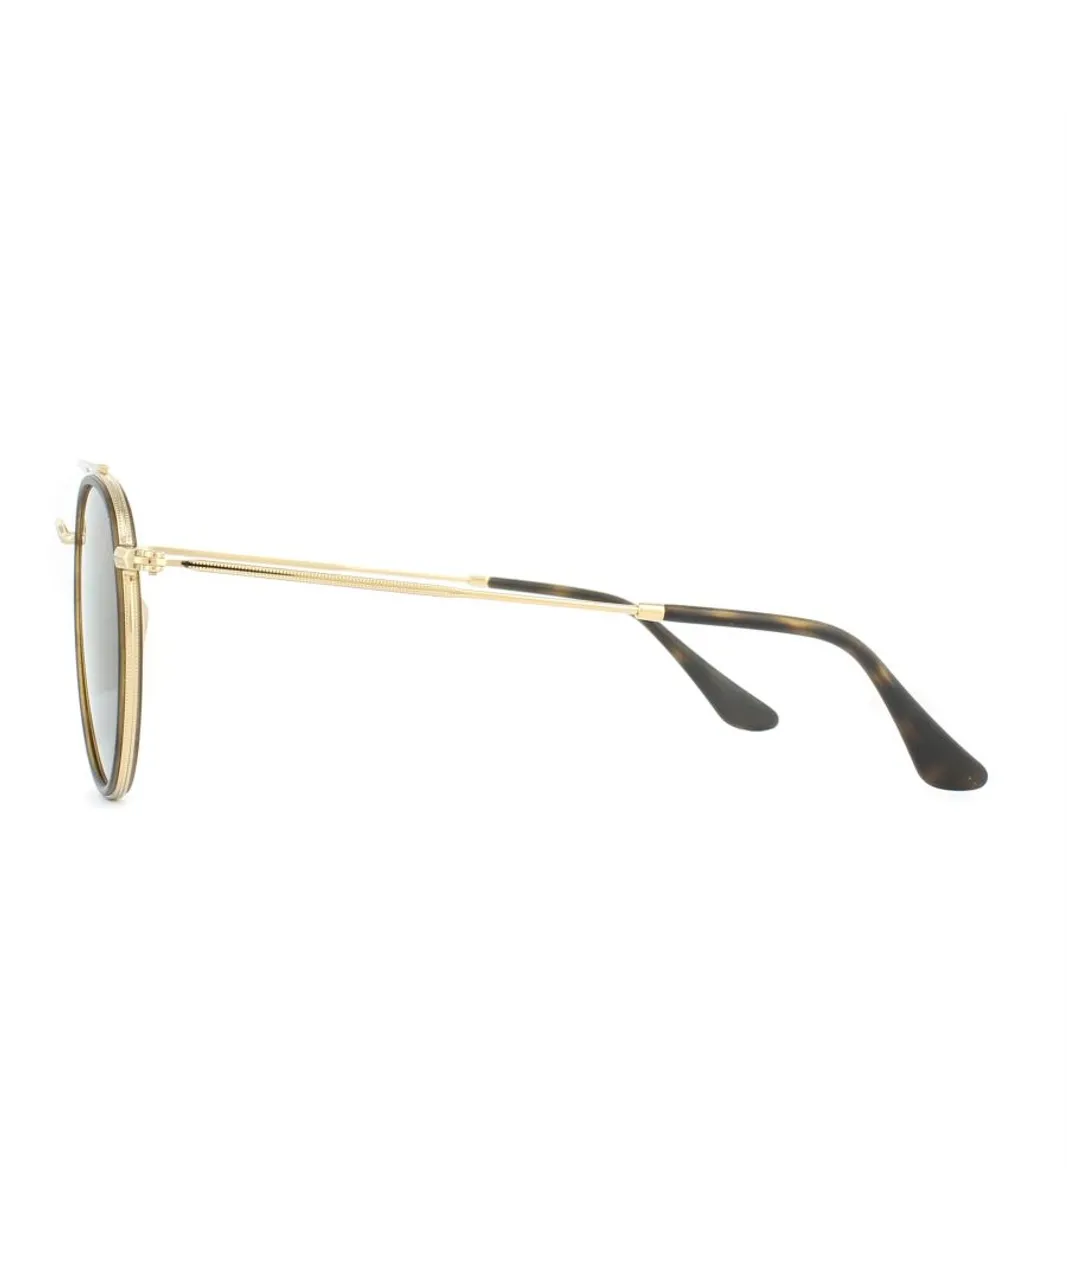 Ray-Ban Unisex Sunglasses Round Double Bridge 3647N 001/57 Gold Brown B-15 Polarized Metal - One